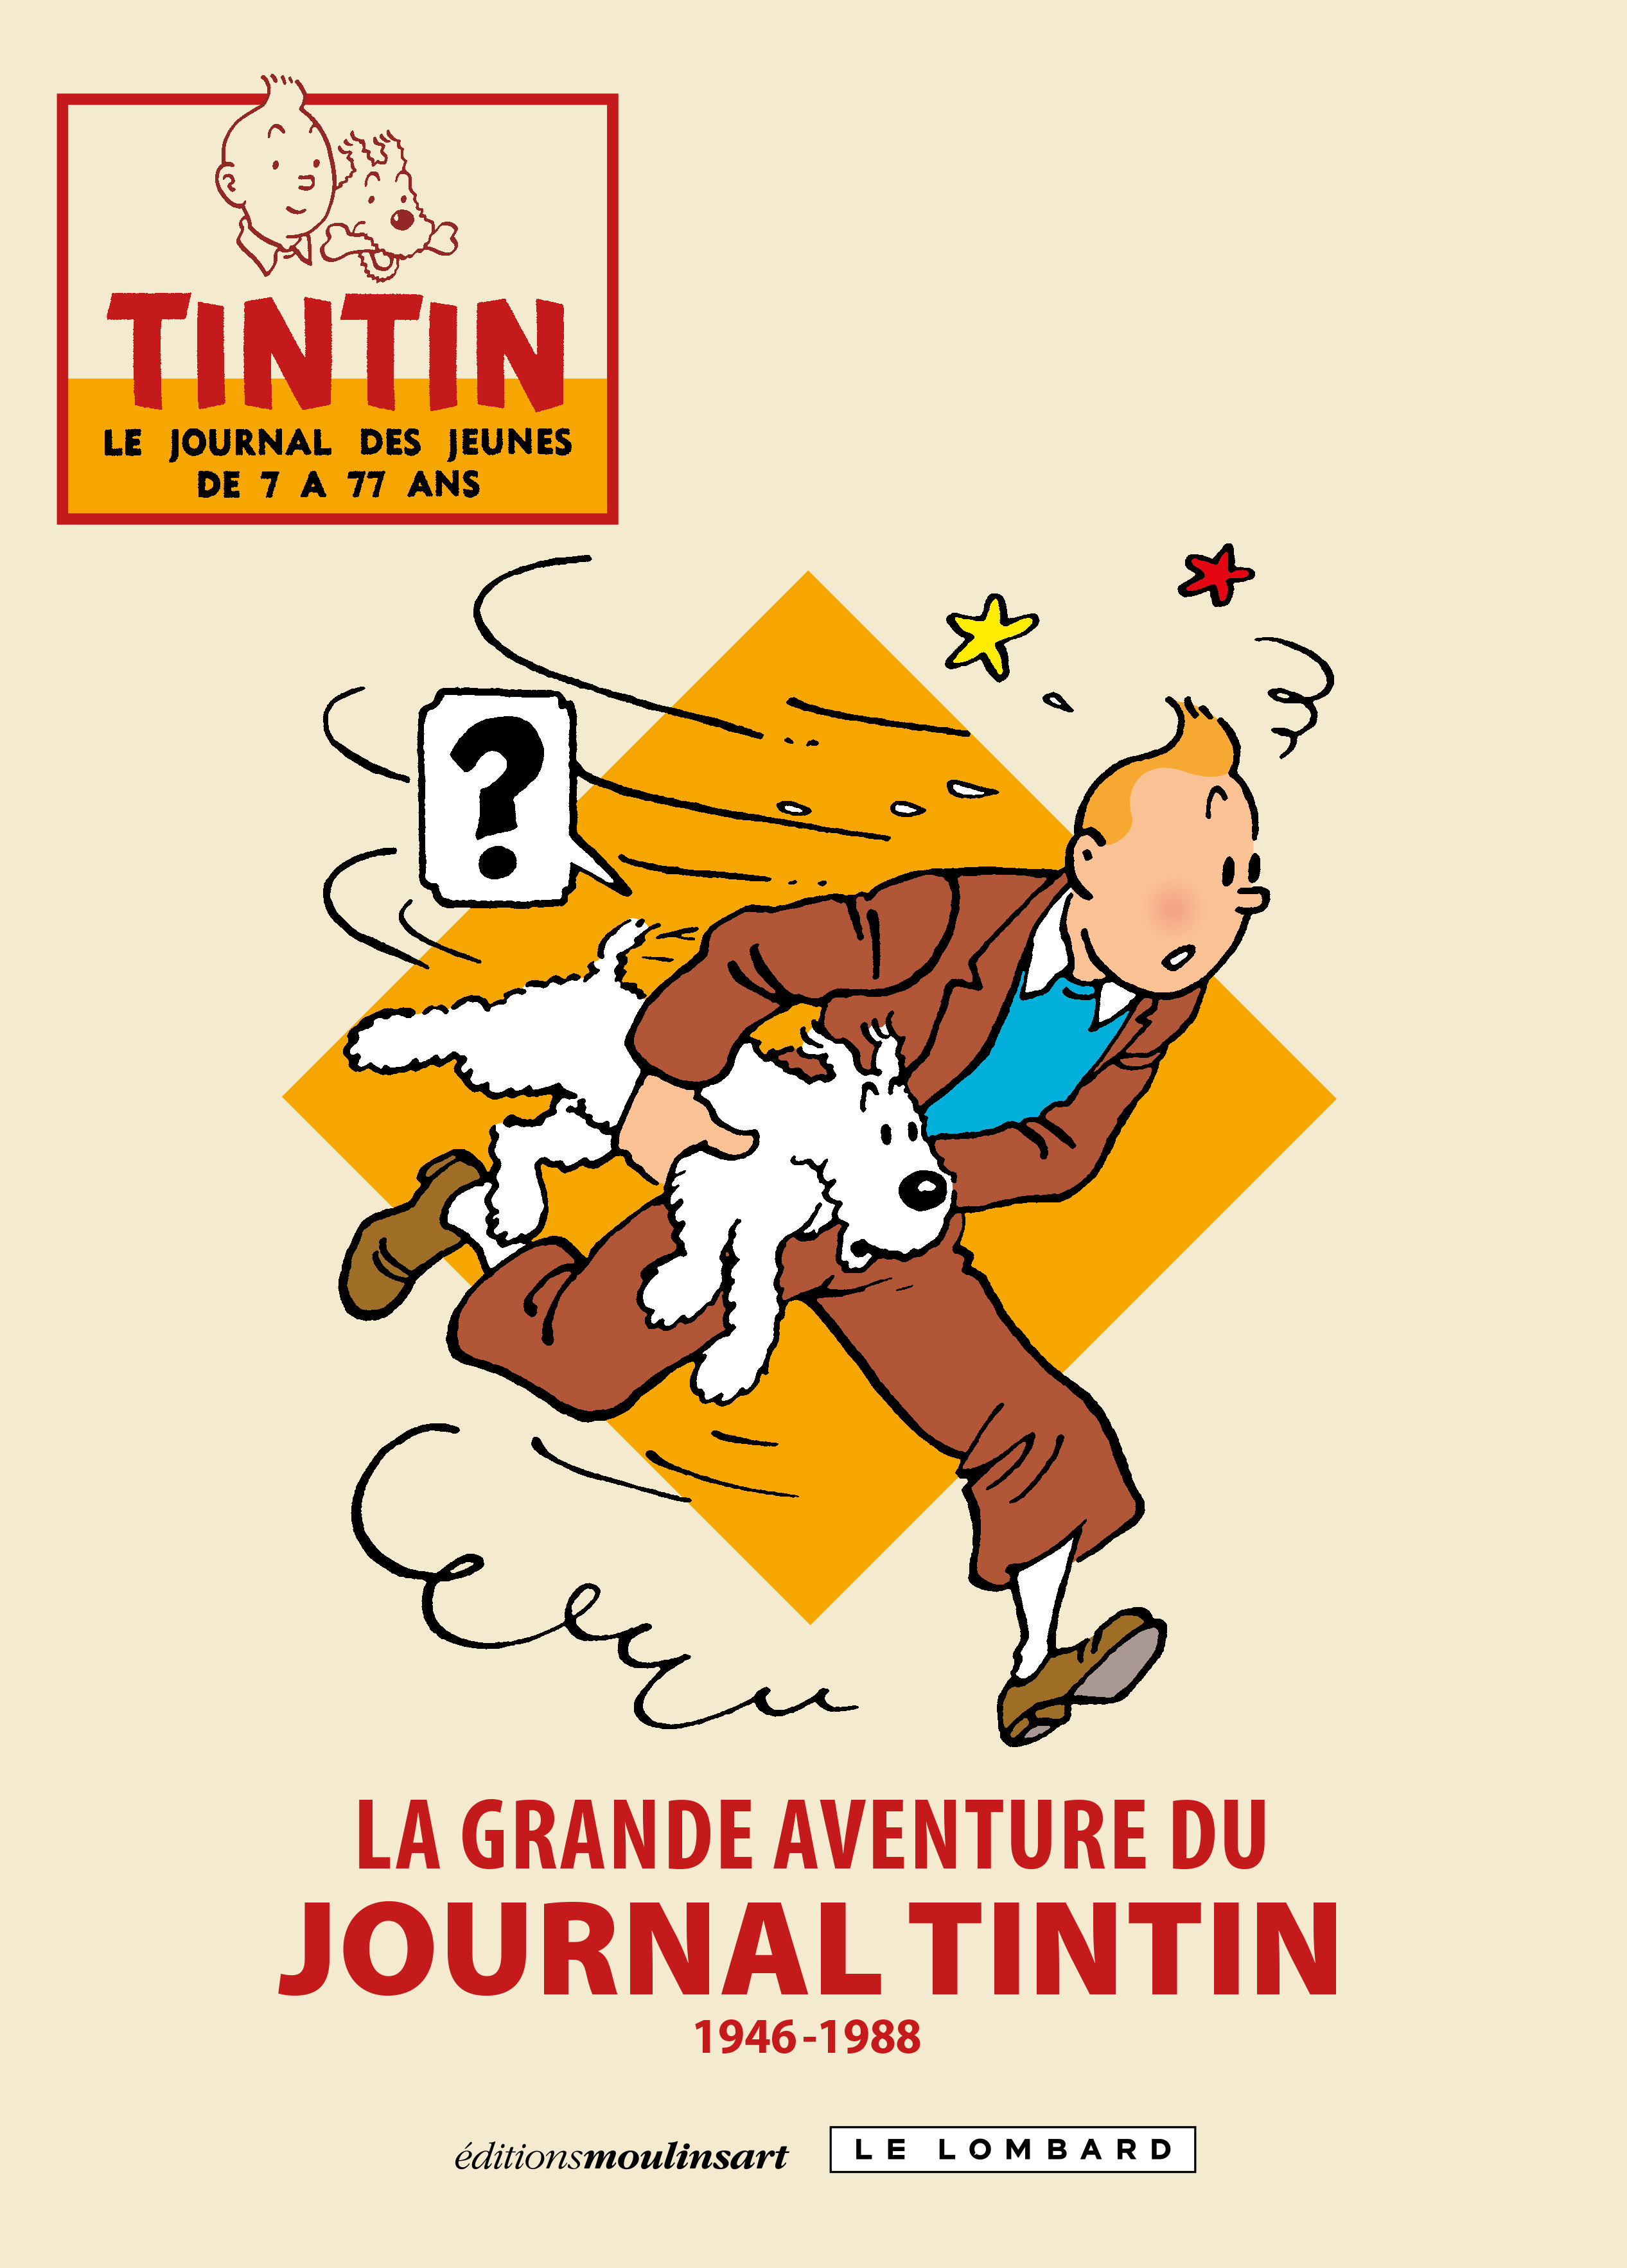 La grande aventure du journal Tintin - Tome 1 - couv